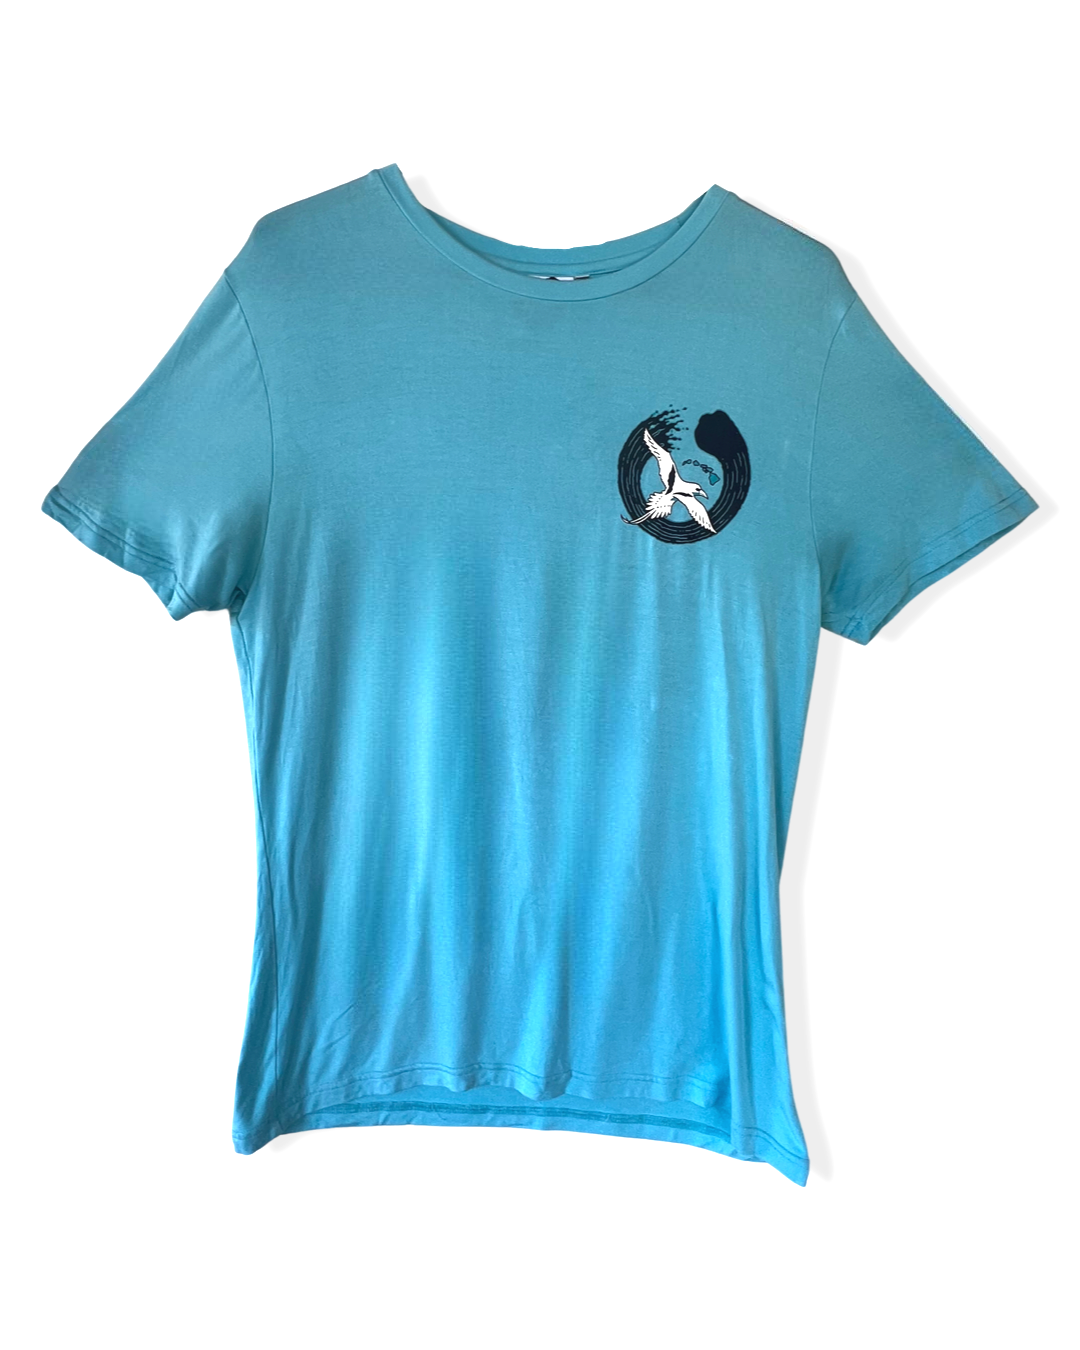 Bamboo Unisex T-Shirt - Humpback Whale (Light Blue)